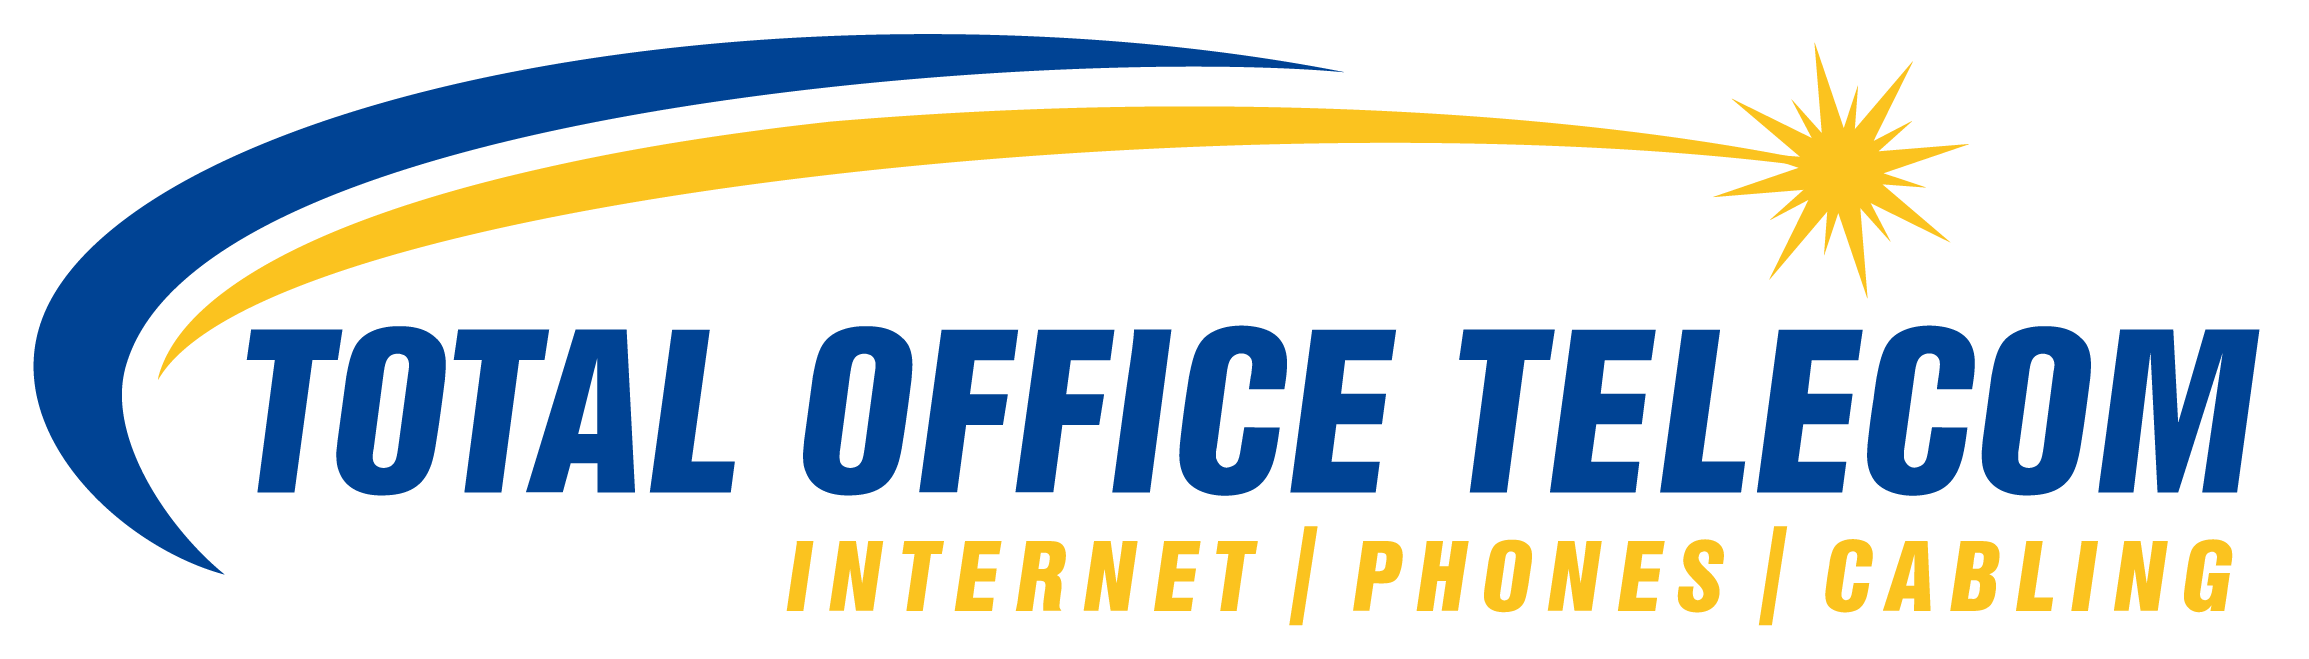 Total Office Telecom